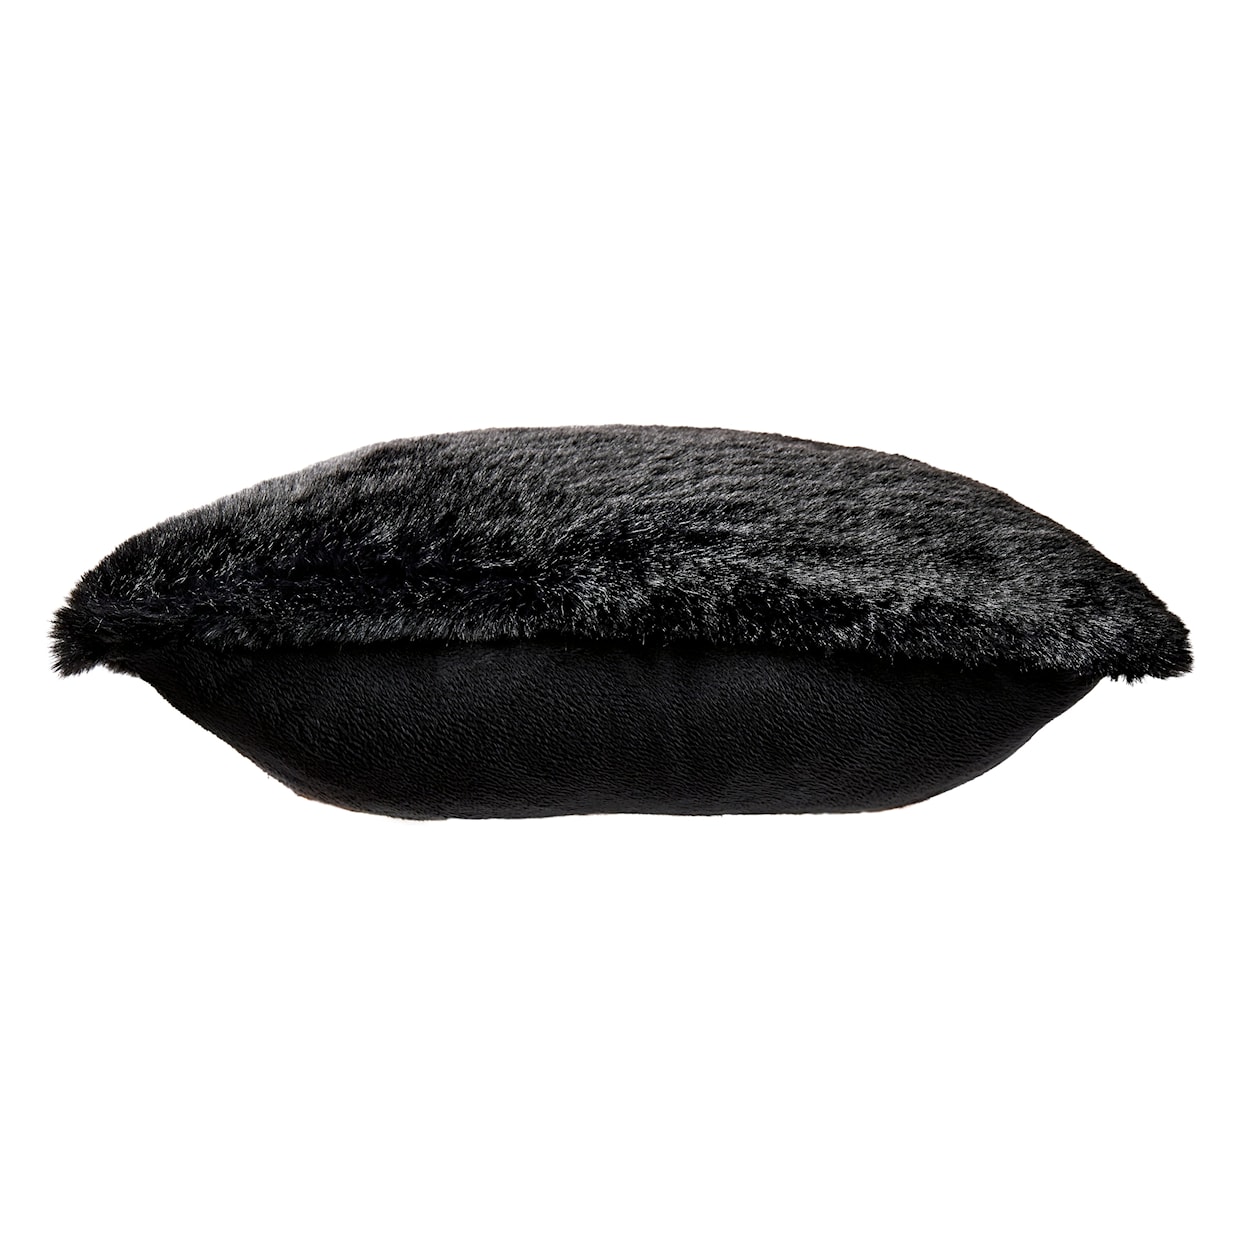 Signature Design Gariland Gariland Black Faux Fur Pillow